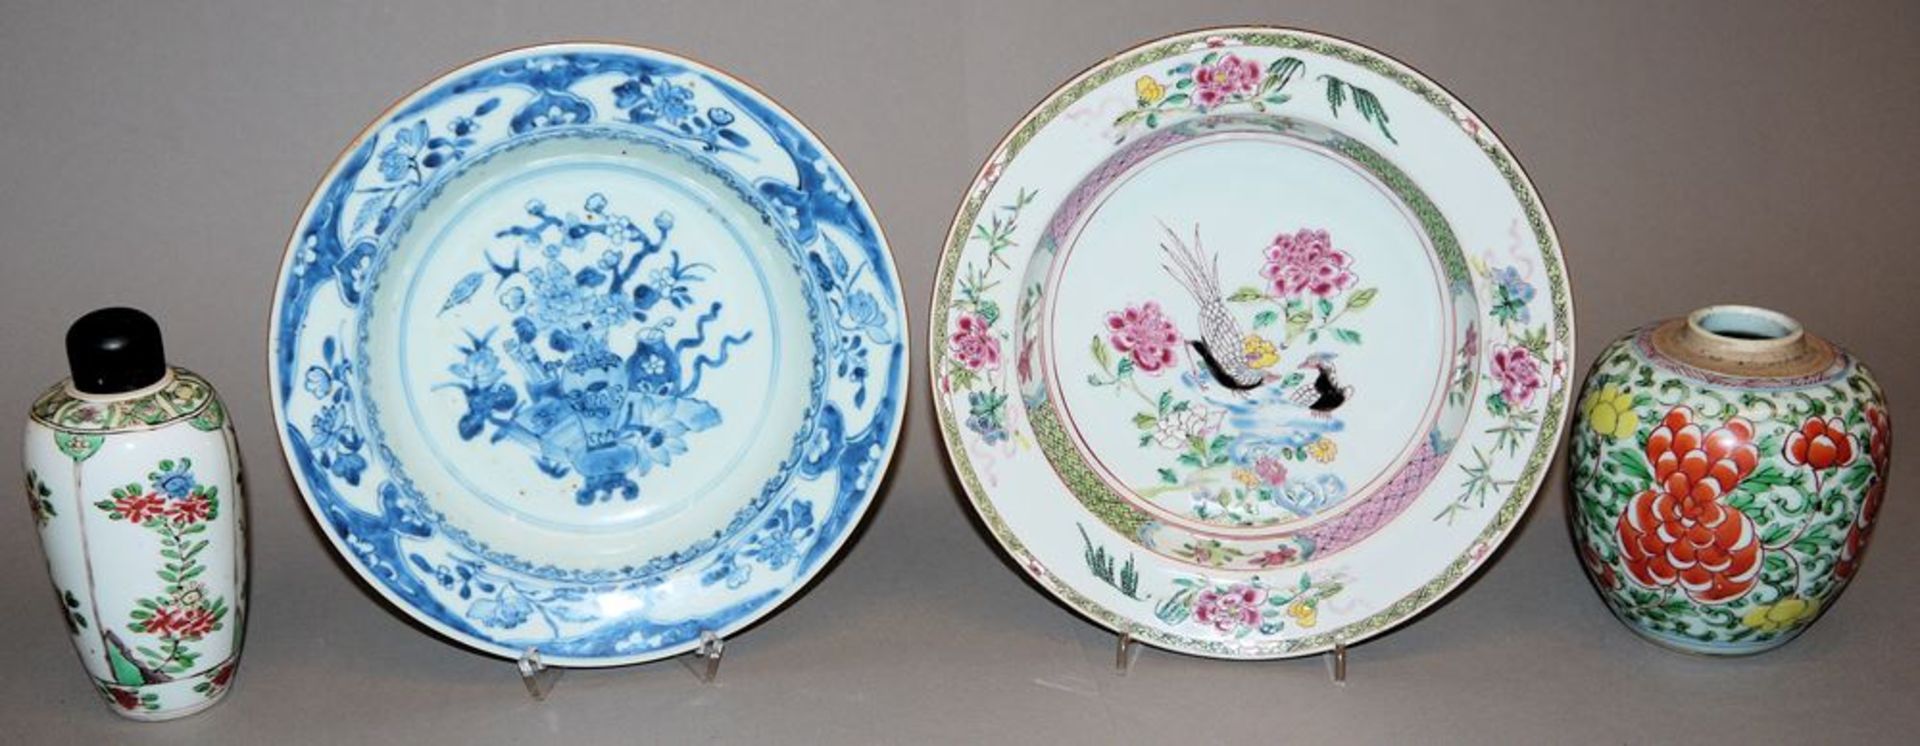 Paar Export-Porzellanteller und zwei Teedosen der Qing-Zeit, China 18. & 19. Jh.